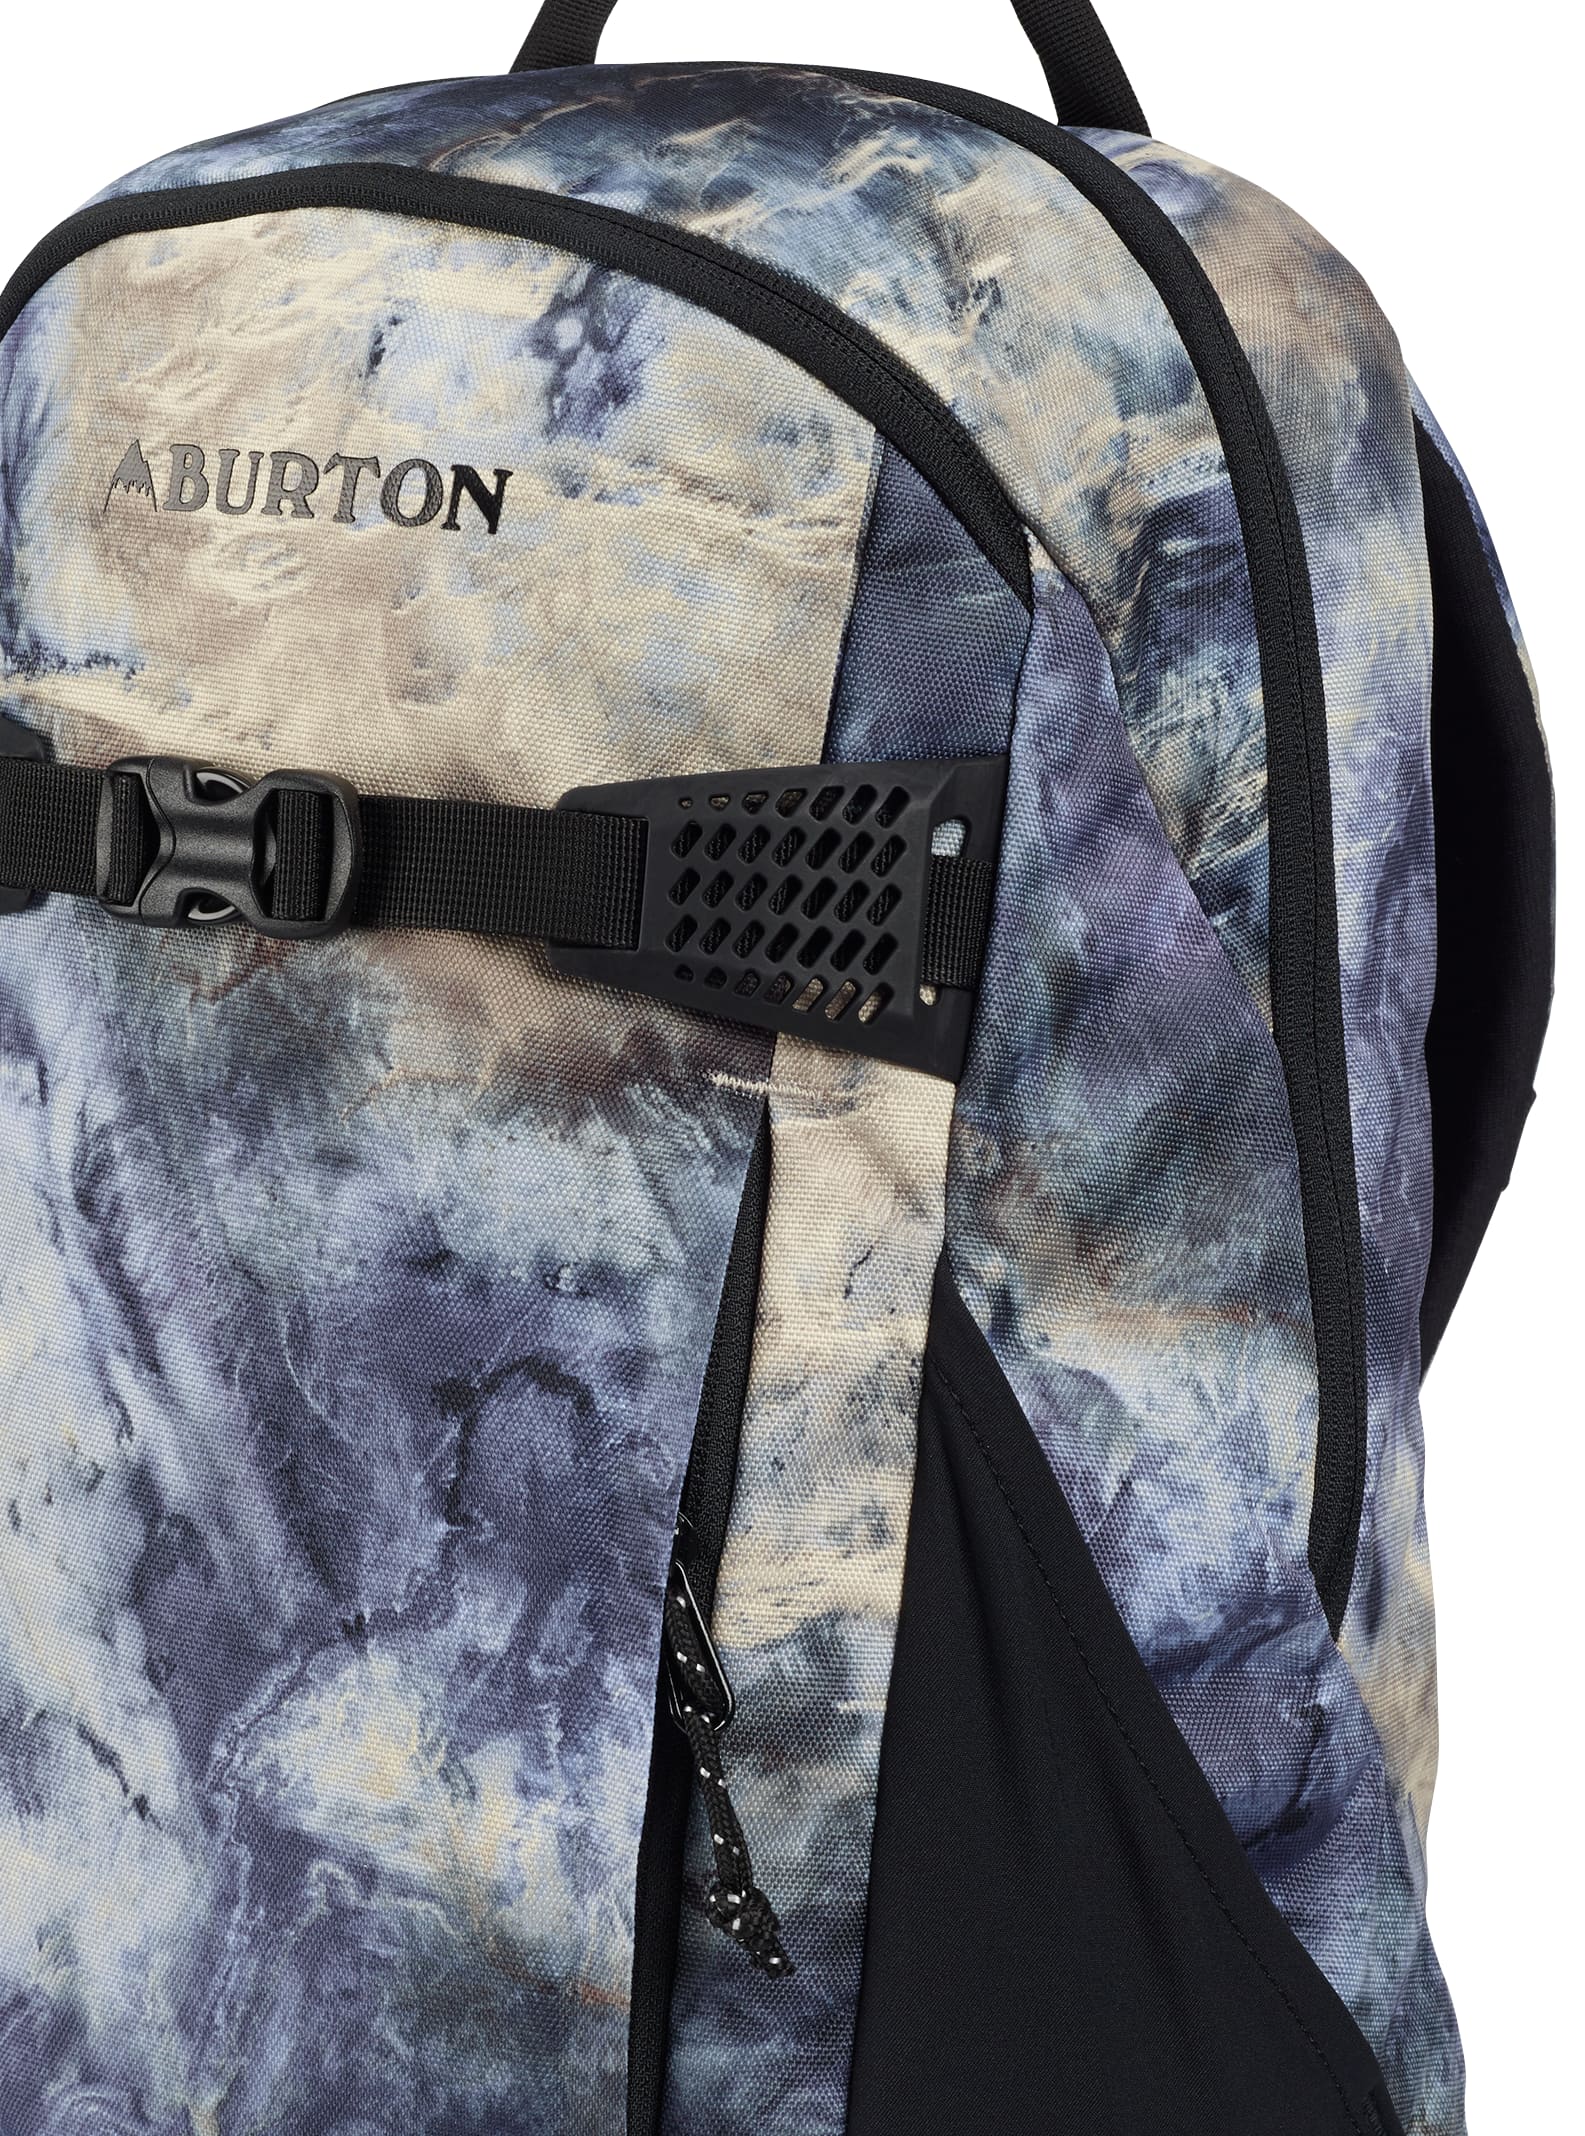 Burton Day Hiker 25L Backpack | Burton.com Fall 2019 US